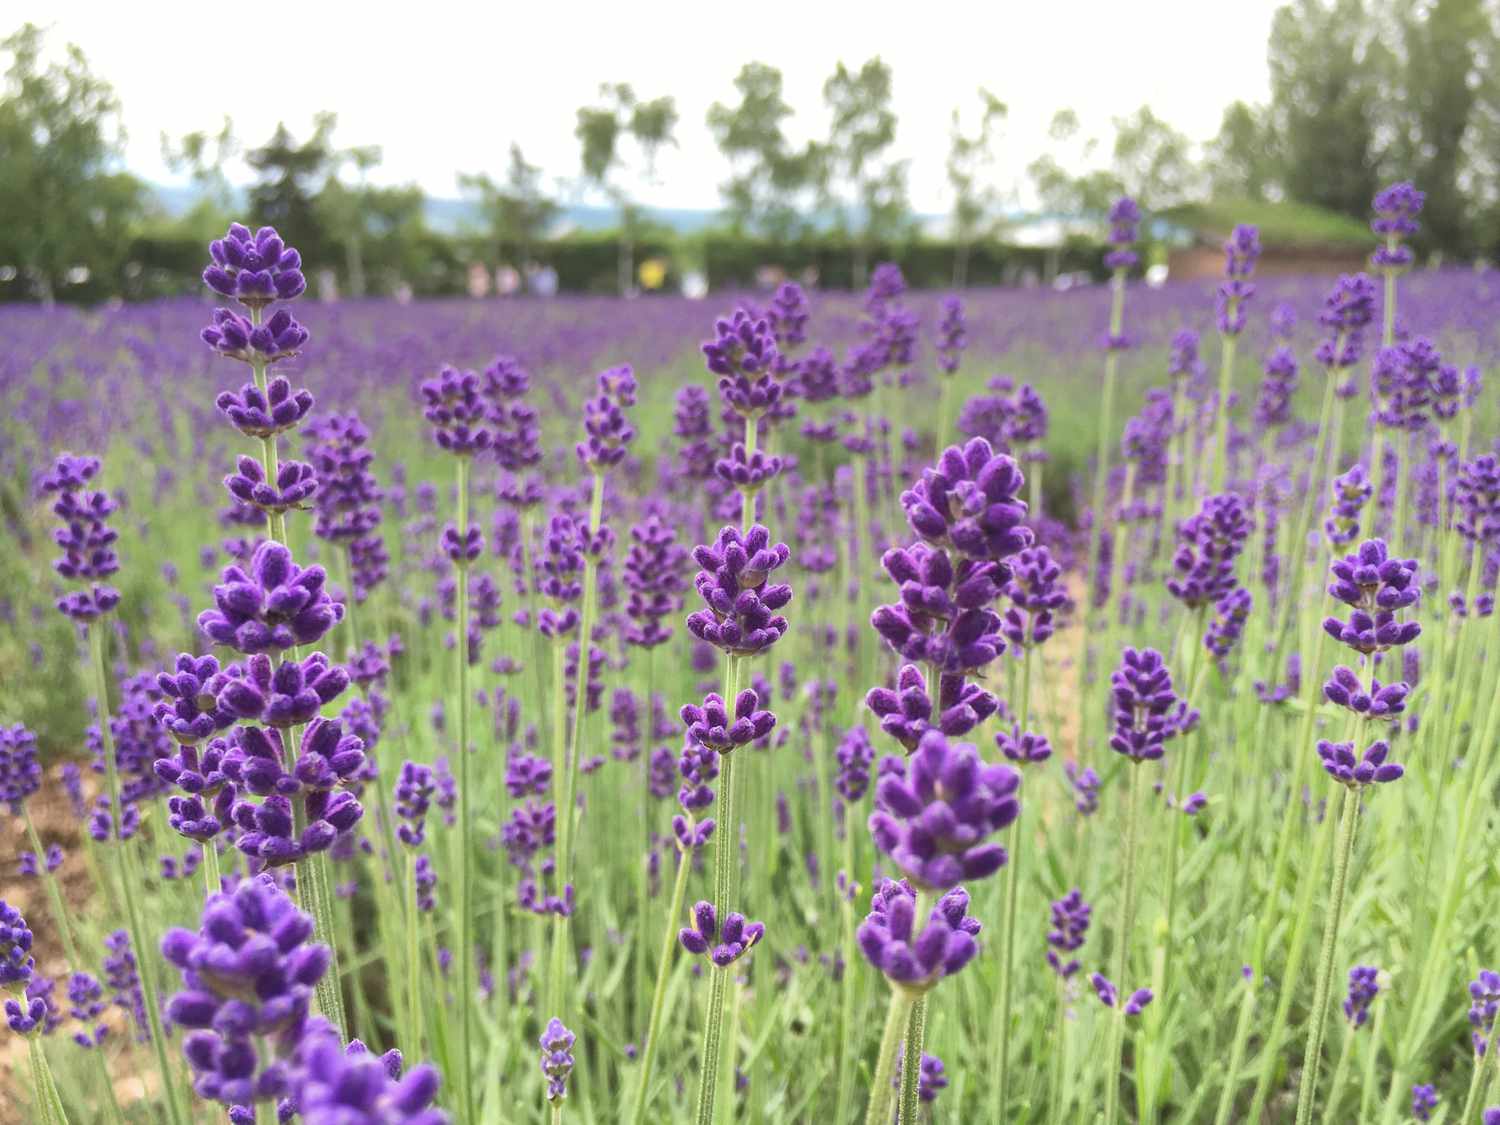 Purple lavender flowers